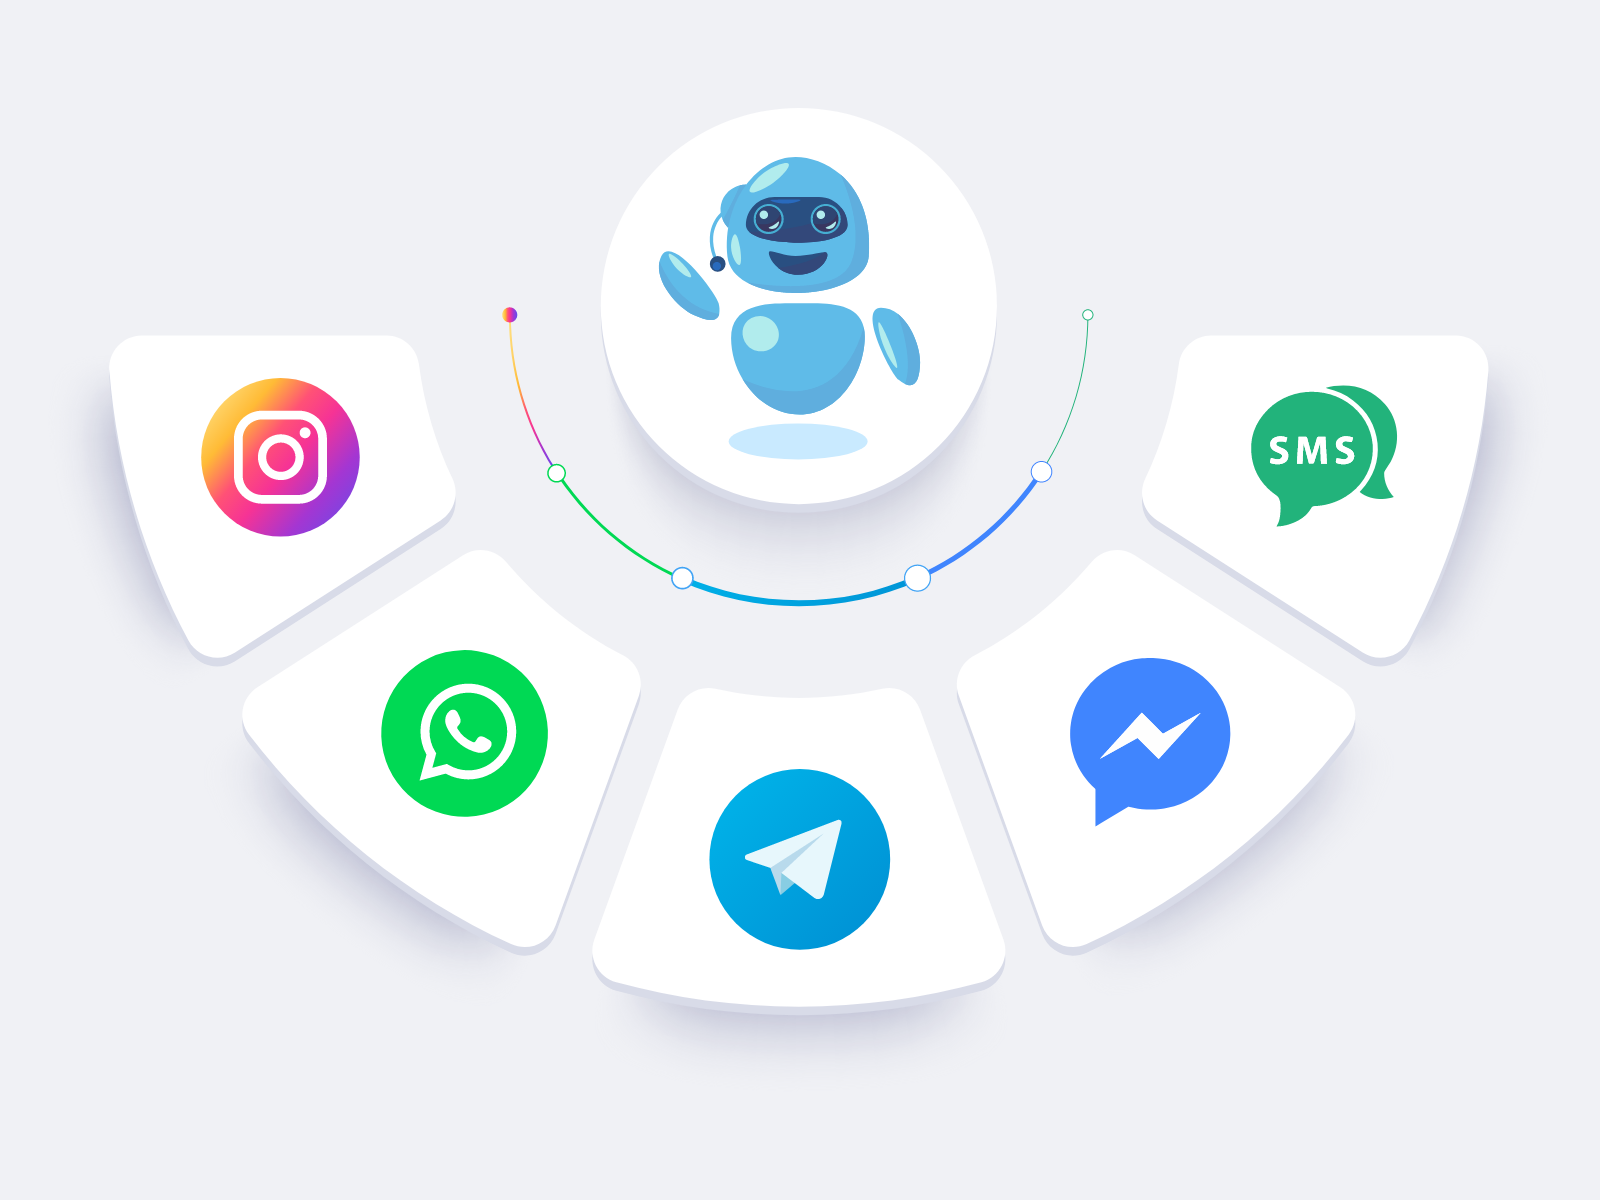 Cense supports messaging platforms like Instagram , WhatsApp, Telegram, Messenger and SMS